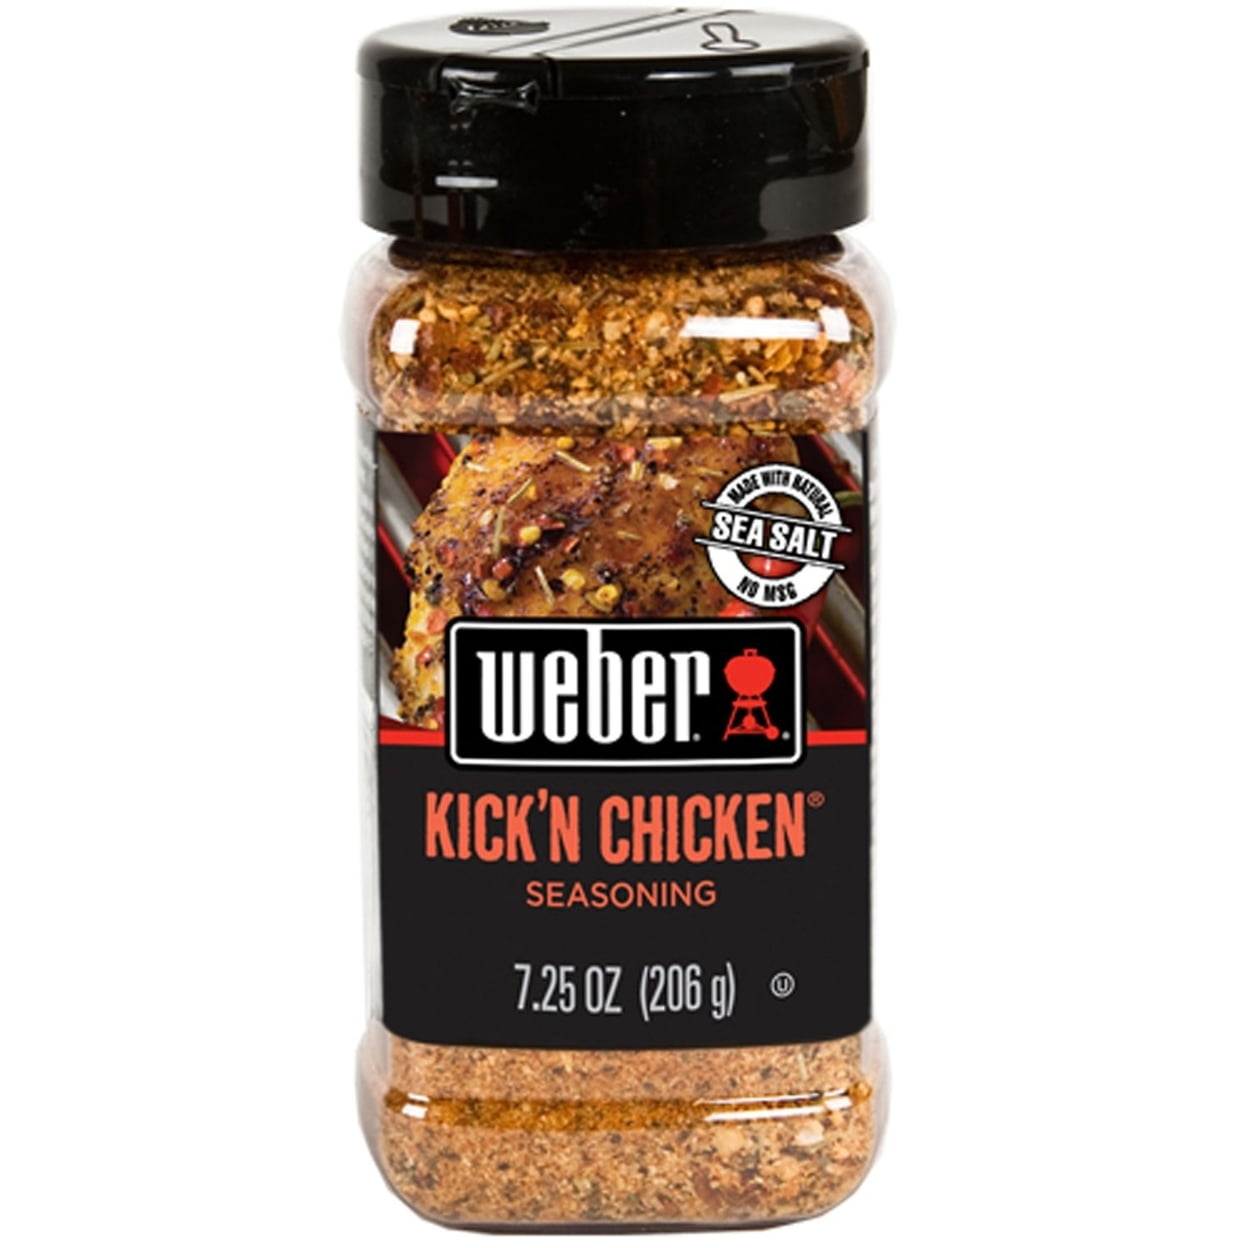 Weber Kick'n Chicken Seasoning, 2.5 Ounce Shaker